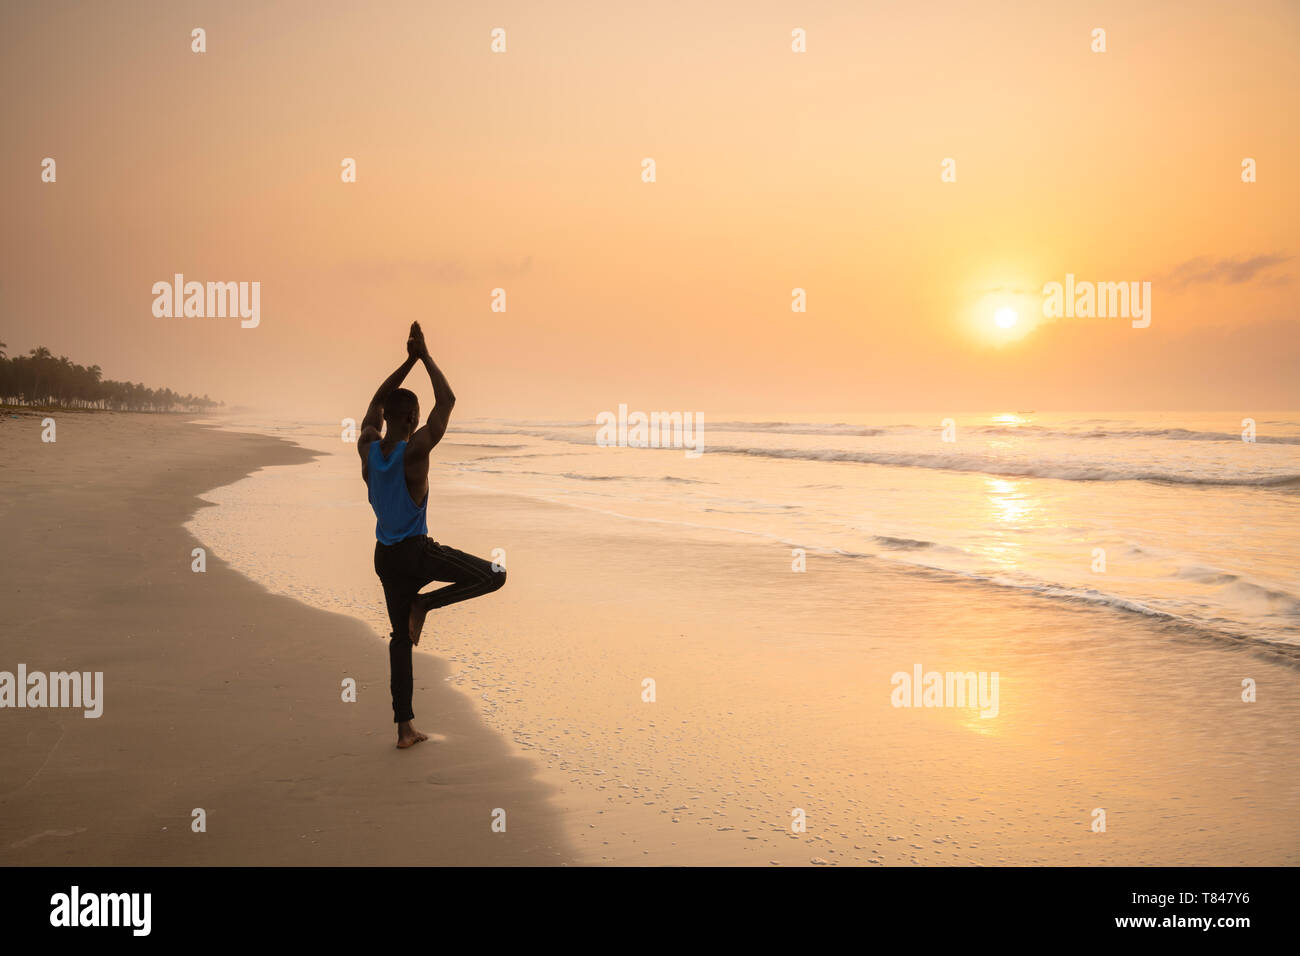 Man practising yoga on beach Stock Photo